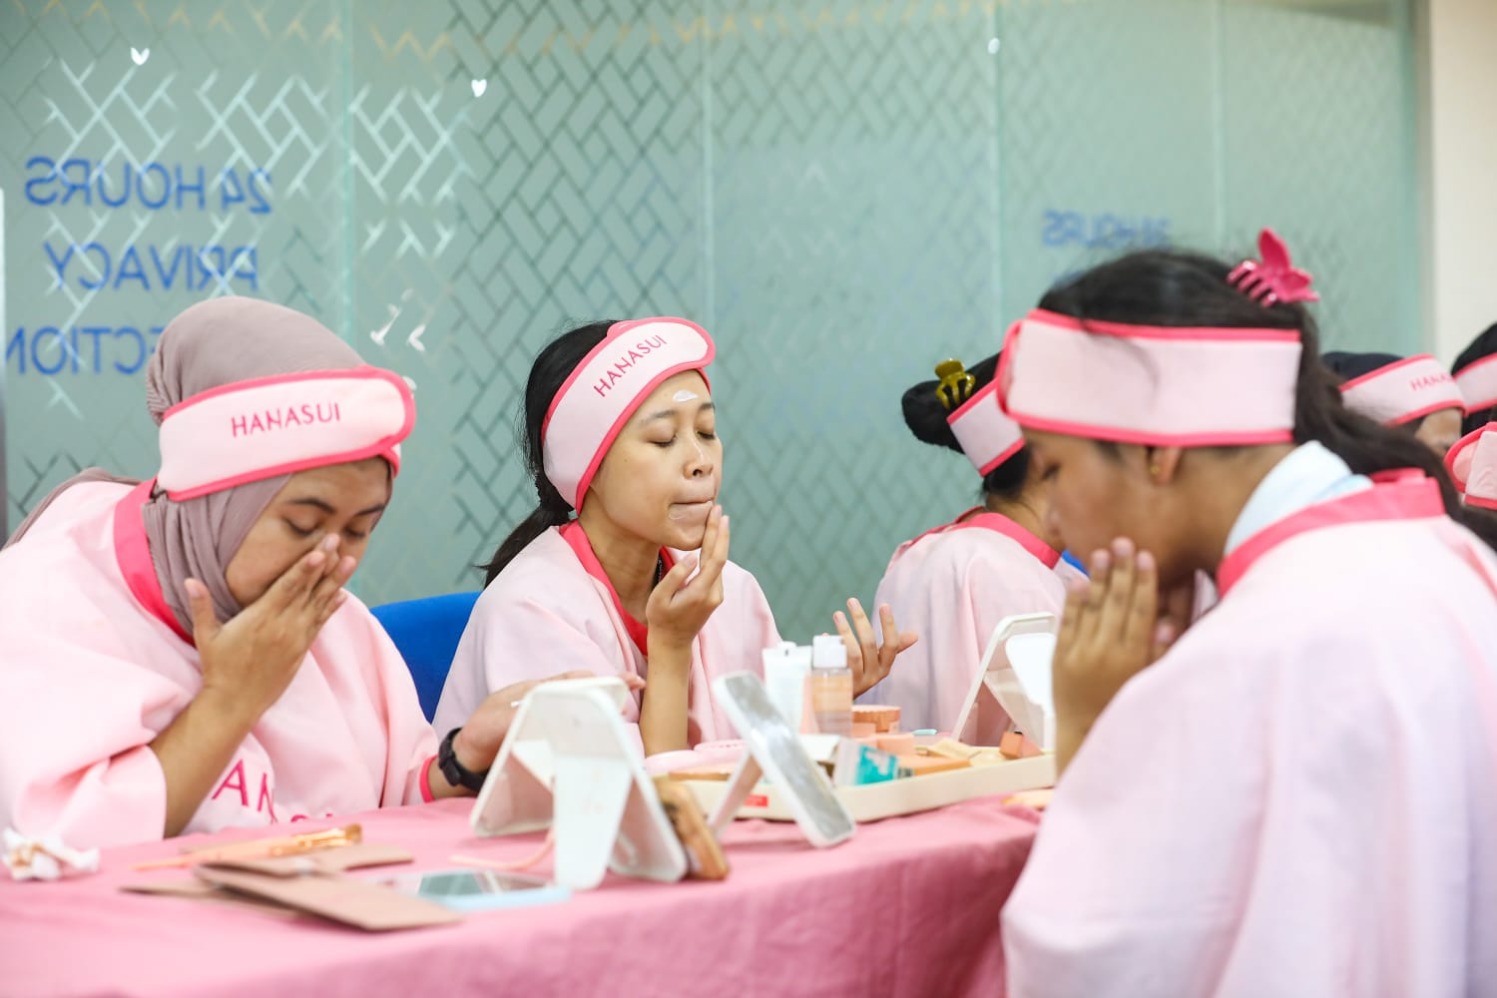 Suasana Beauty Class Bisnis Indonesia x Hanasui (Sumber gambar: Abdurachman/Hypeabis.id)